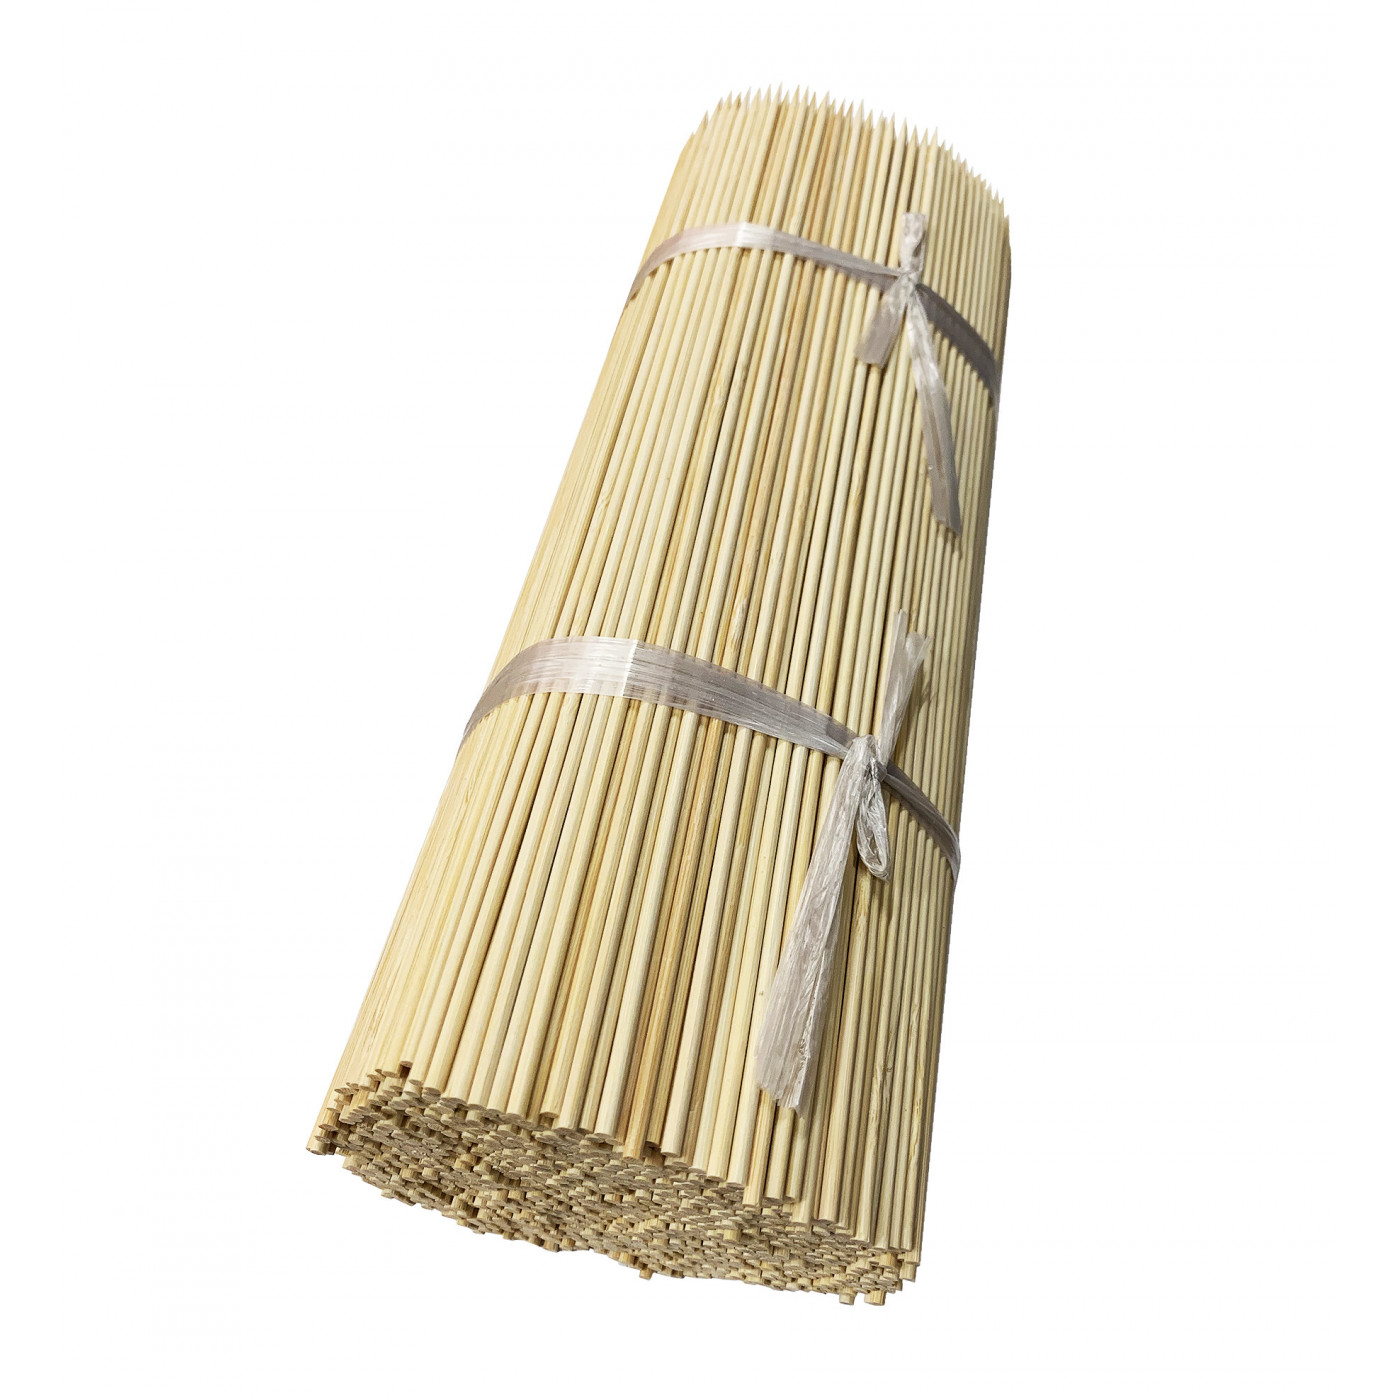 Set of 1000 bamboo sticks (3 mm x 30 cm)